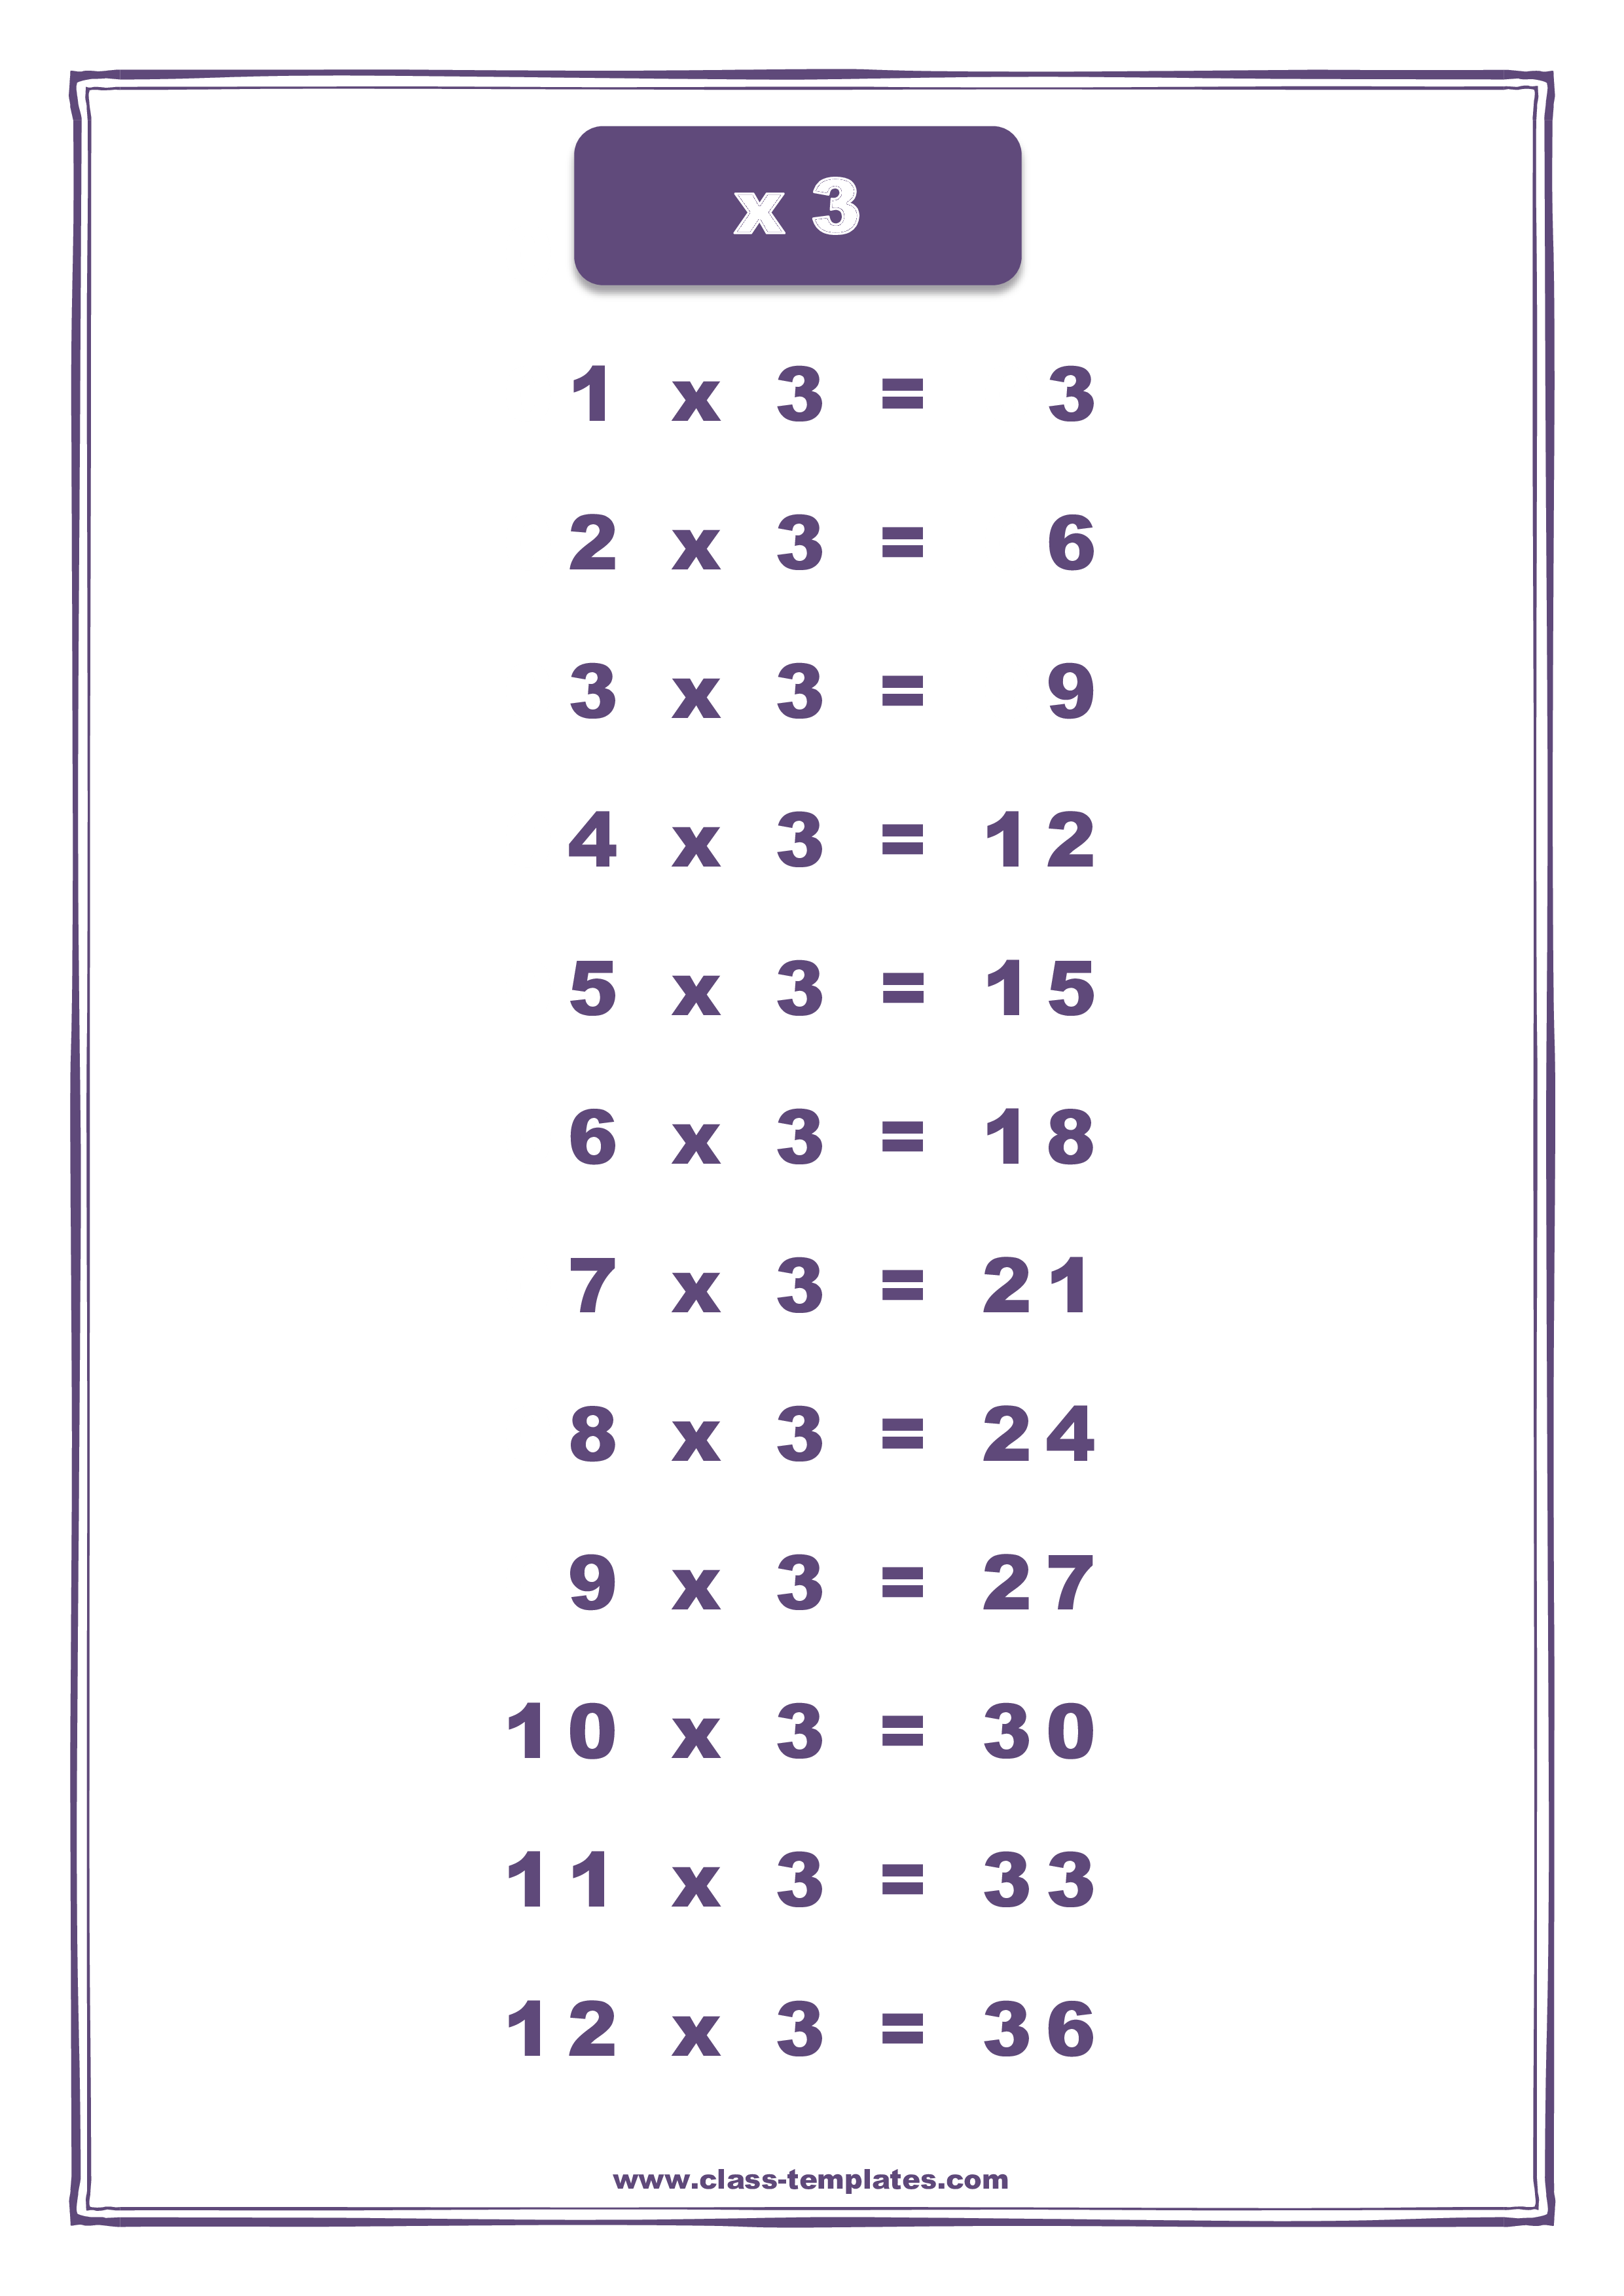 x3 times table chart modèles